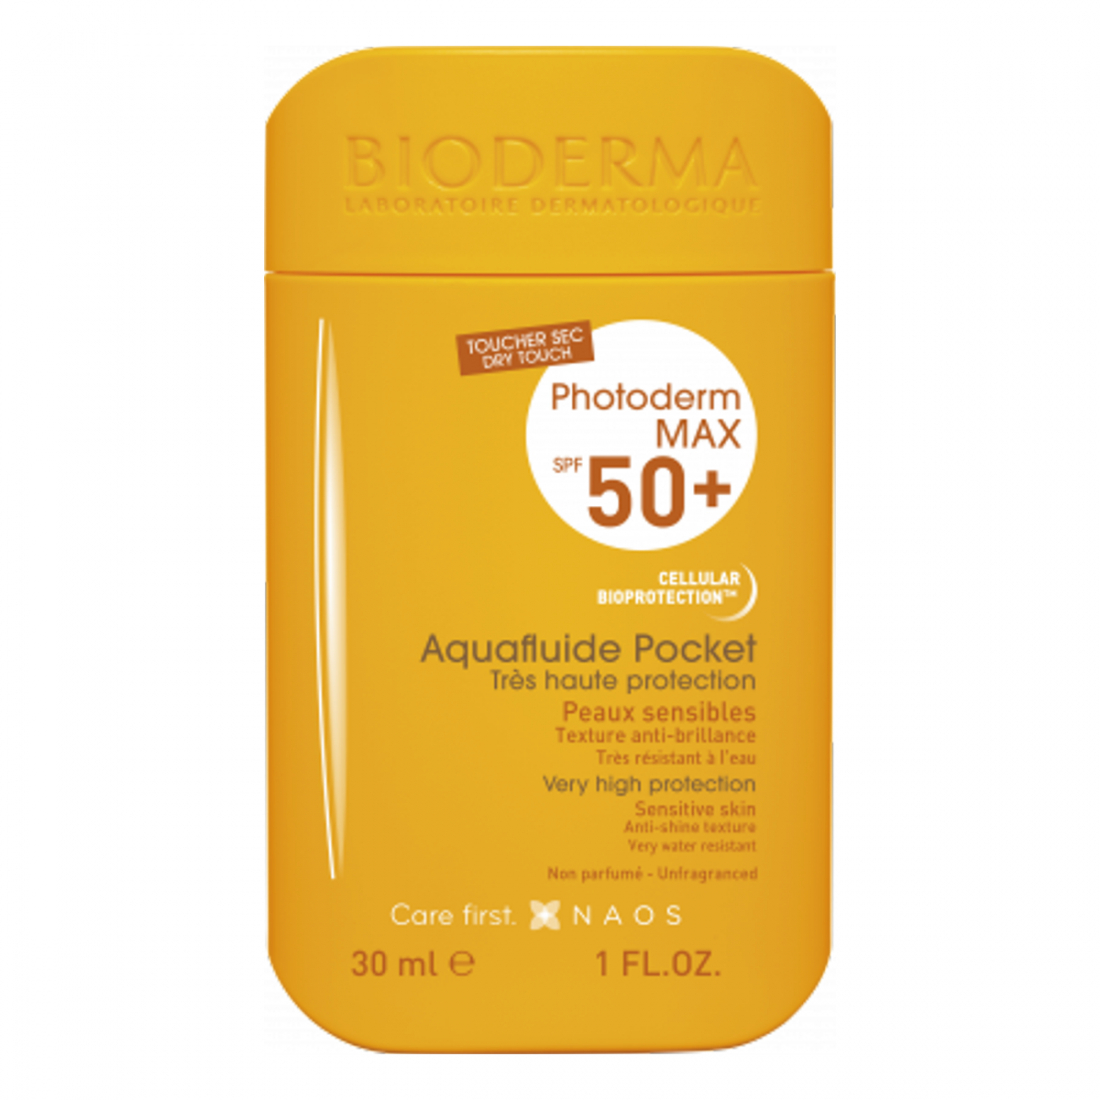 'Photoderm Max Aquafluide Pocket SPF 50+' Face Sunscreen - 30 ml